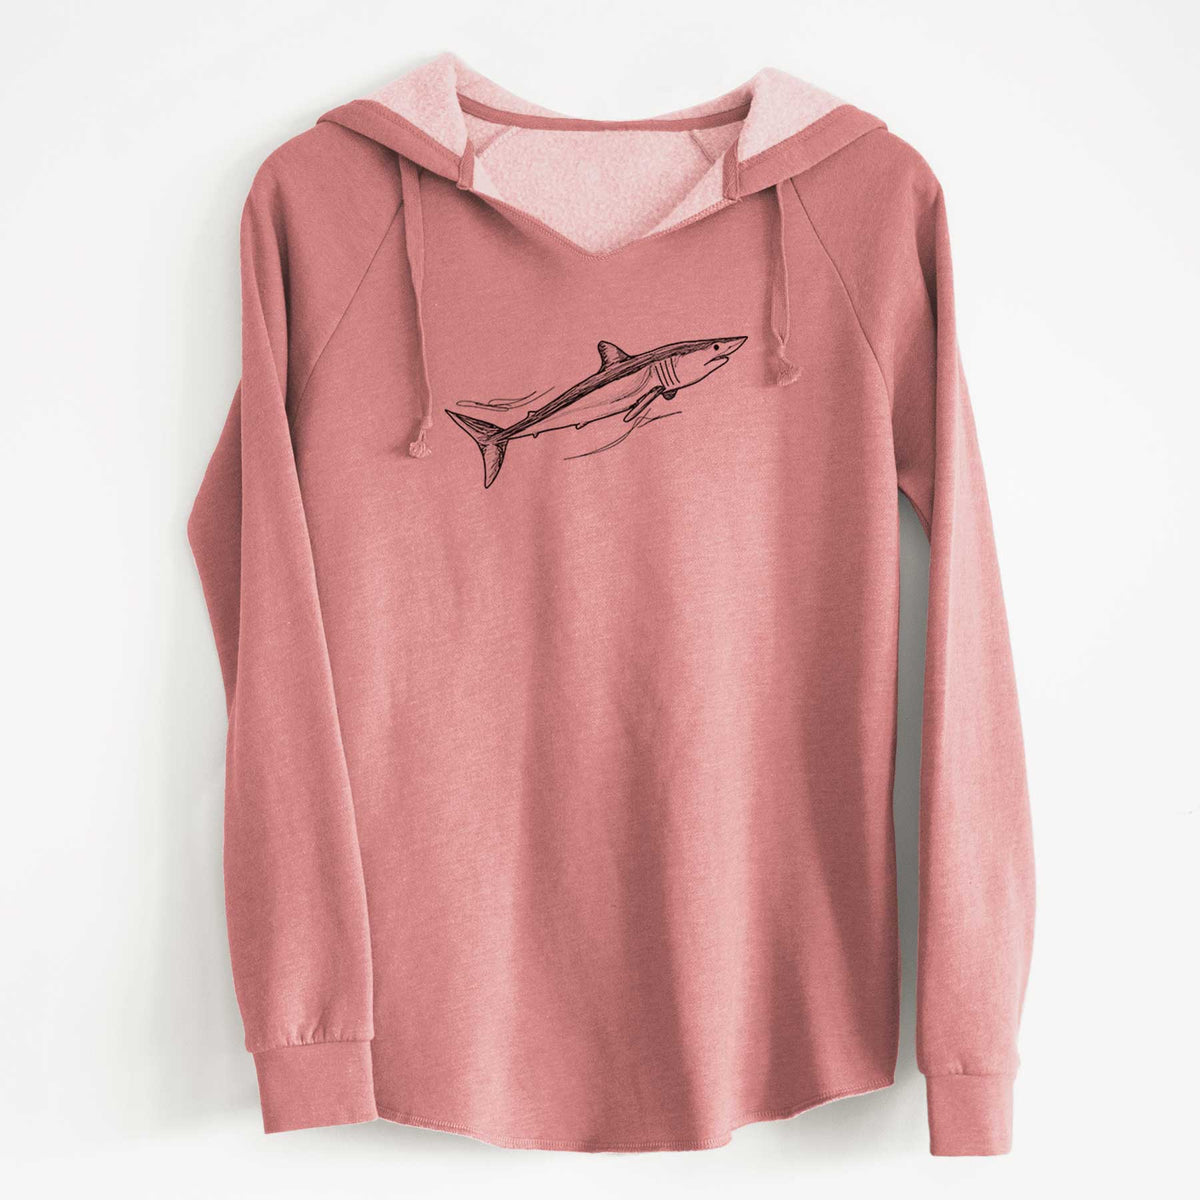 Mako Shark - Cali Wave Hooded Sweatshirt